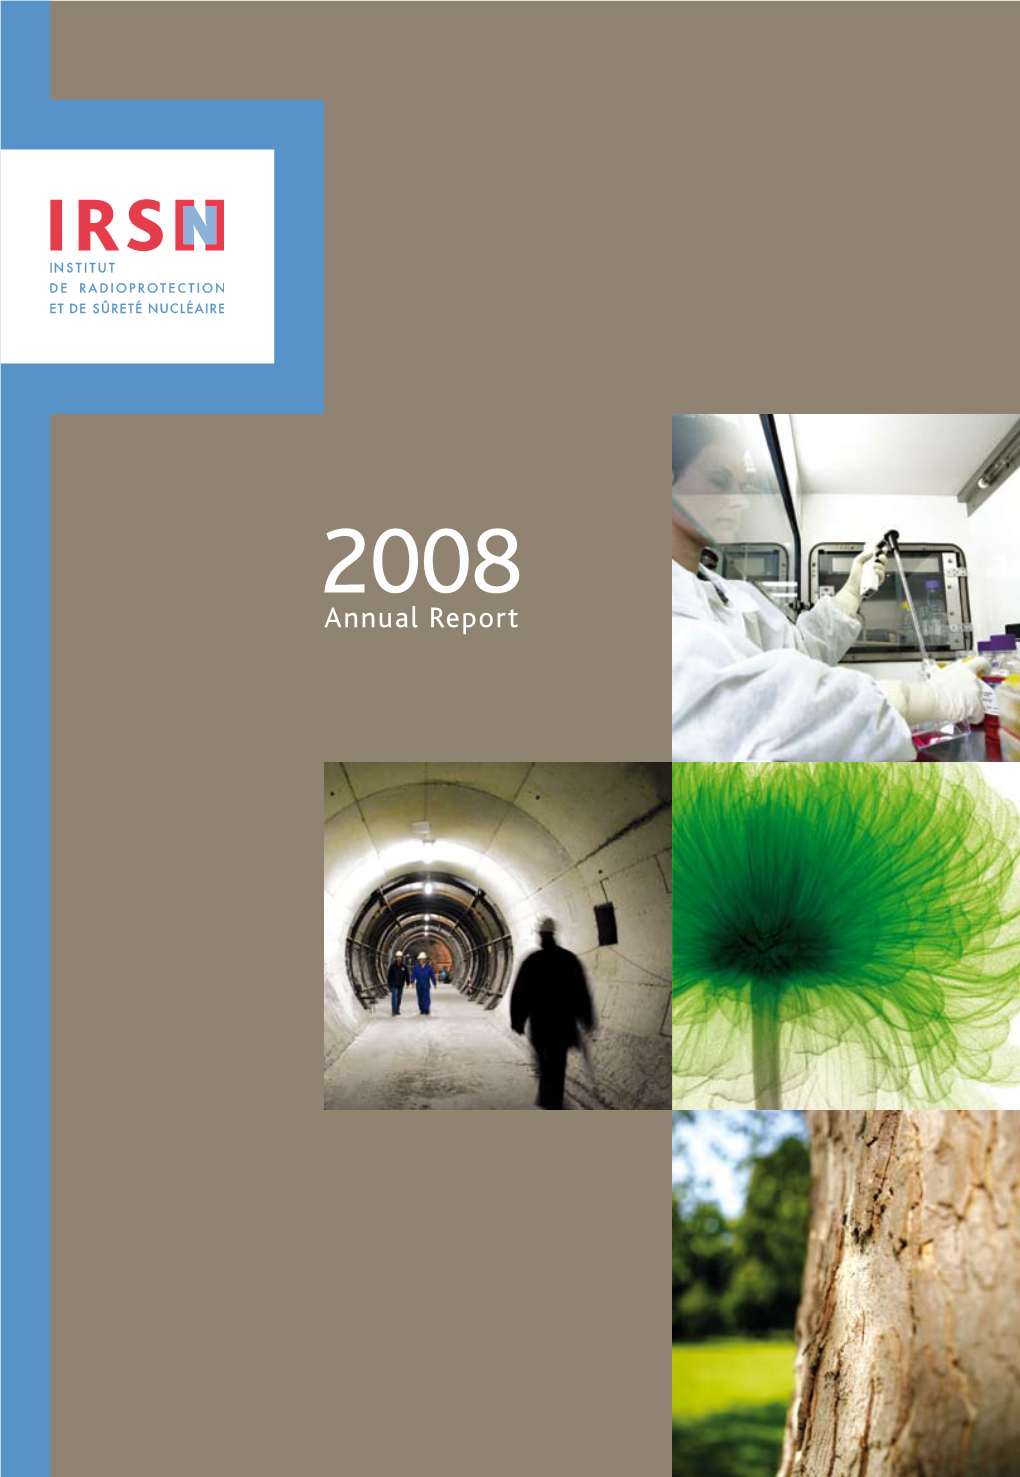 IRSN Annual Report 2008